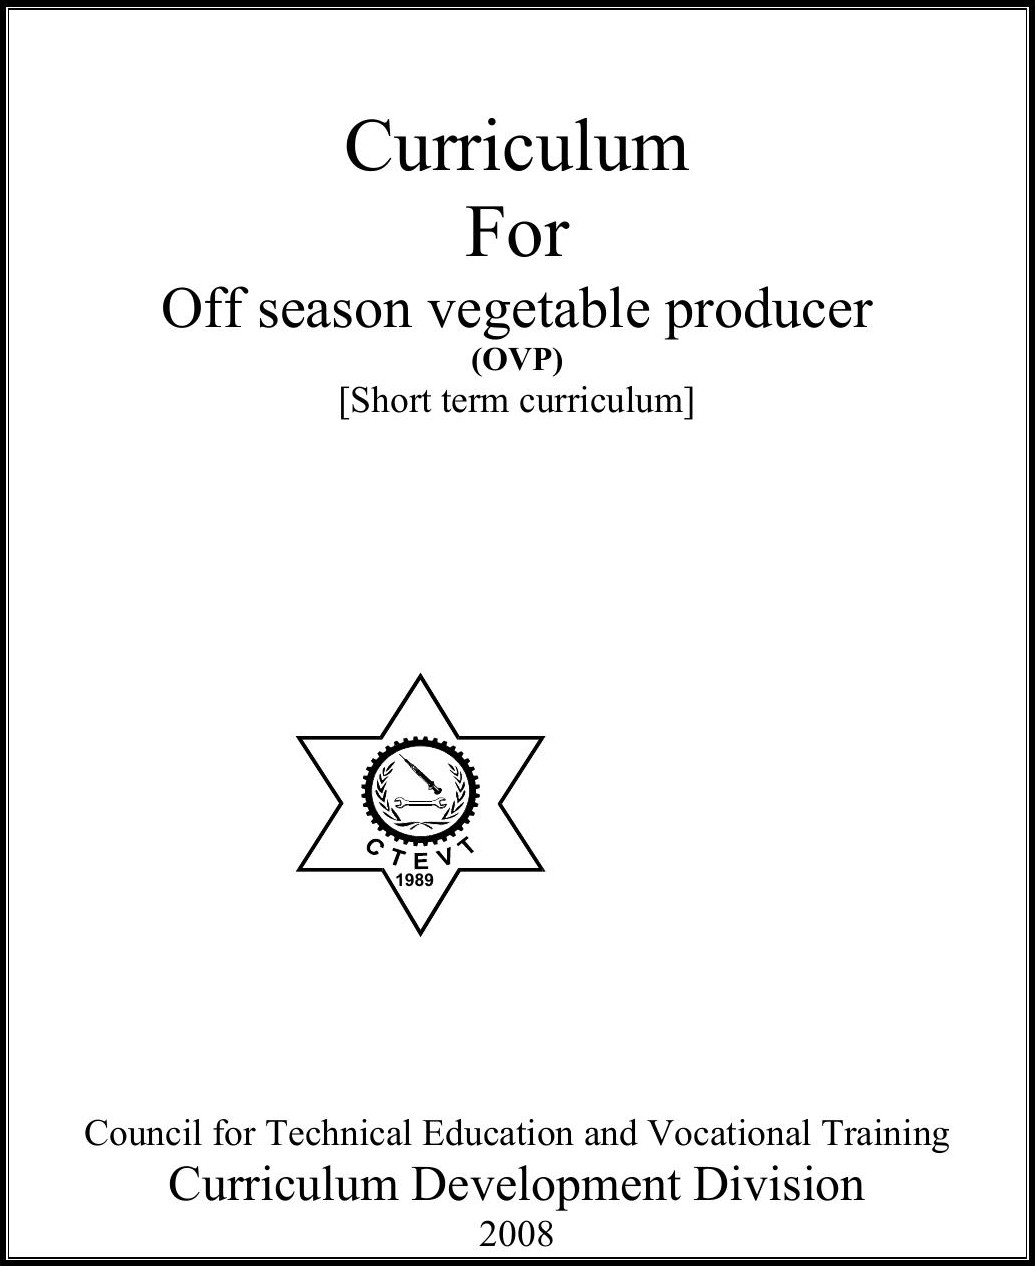 Off season vegetable producer, 2008